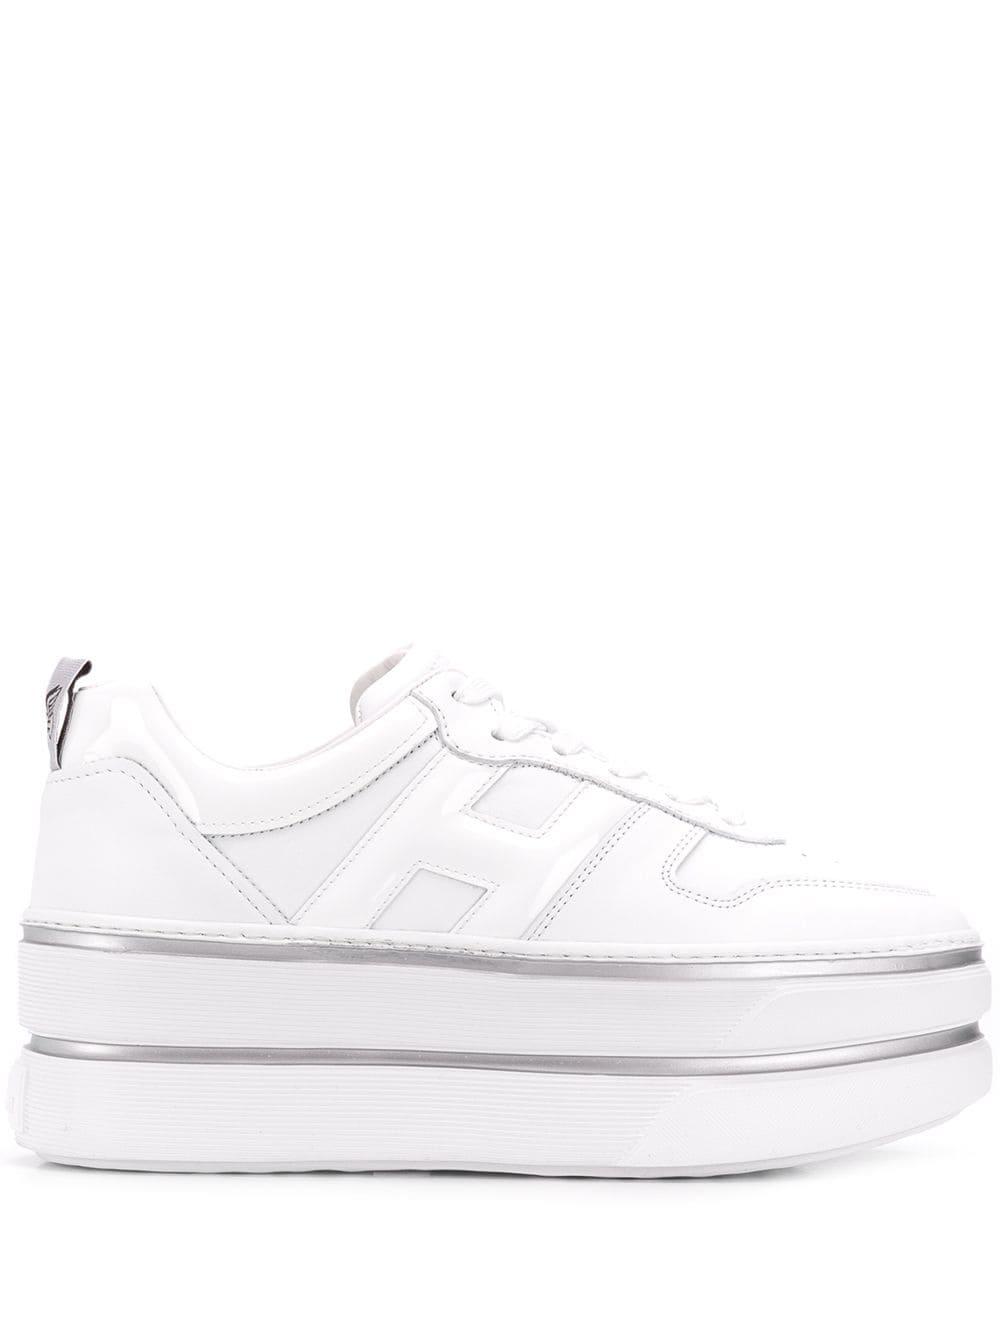 Hogan Leather White Platform Sneakers 